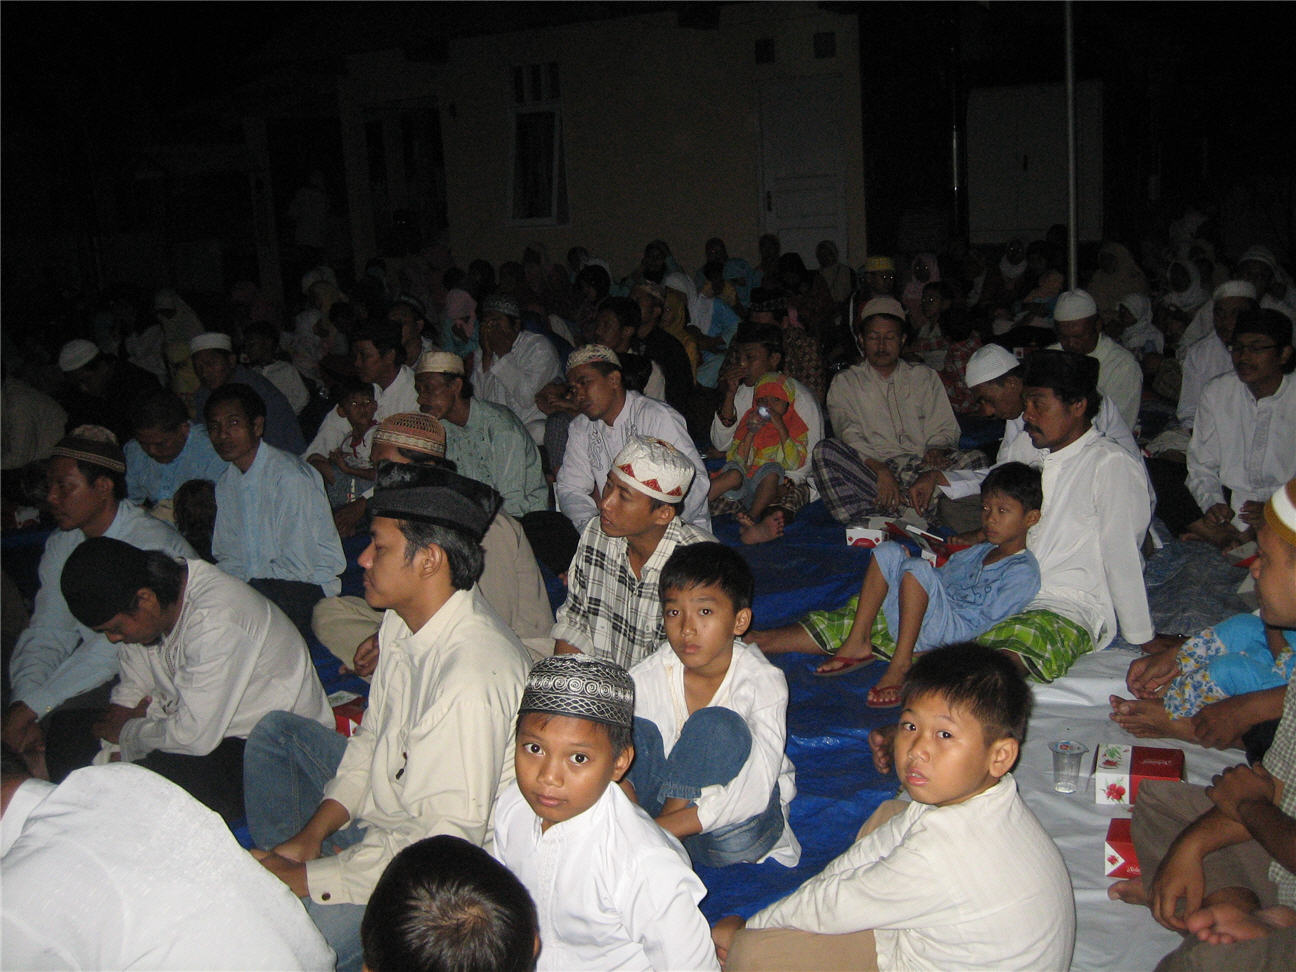 Acara Maulid Nabi Muhammad SAW, Musholla Al Muhajirin  Vila Mutiara Gading 2 Community